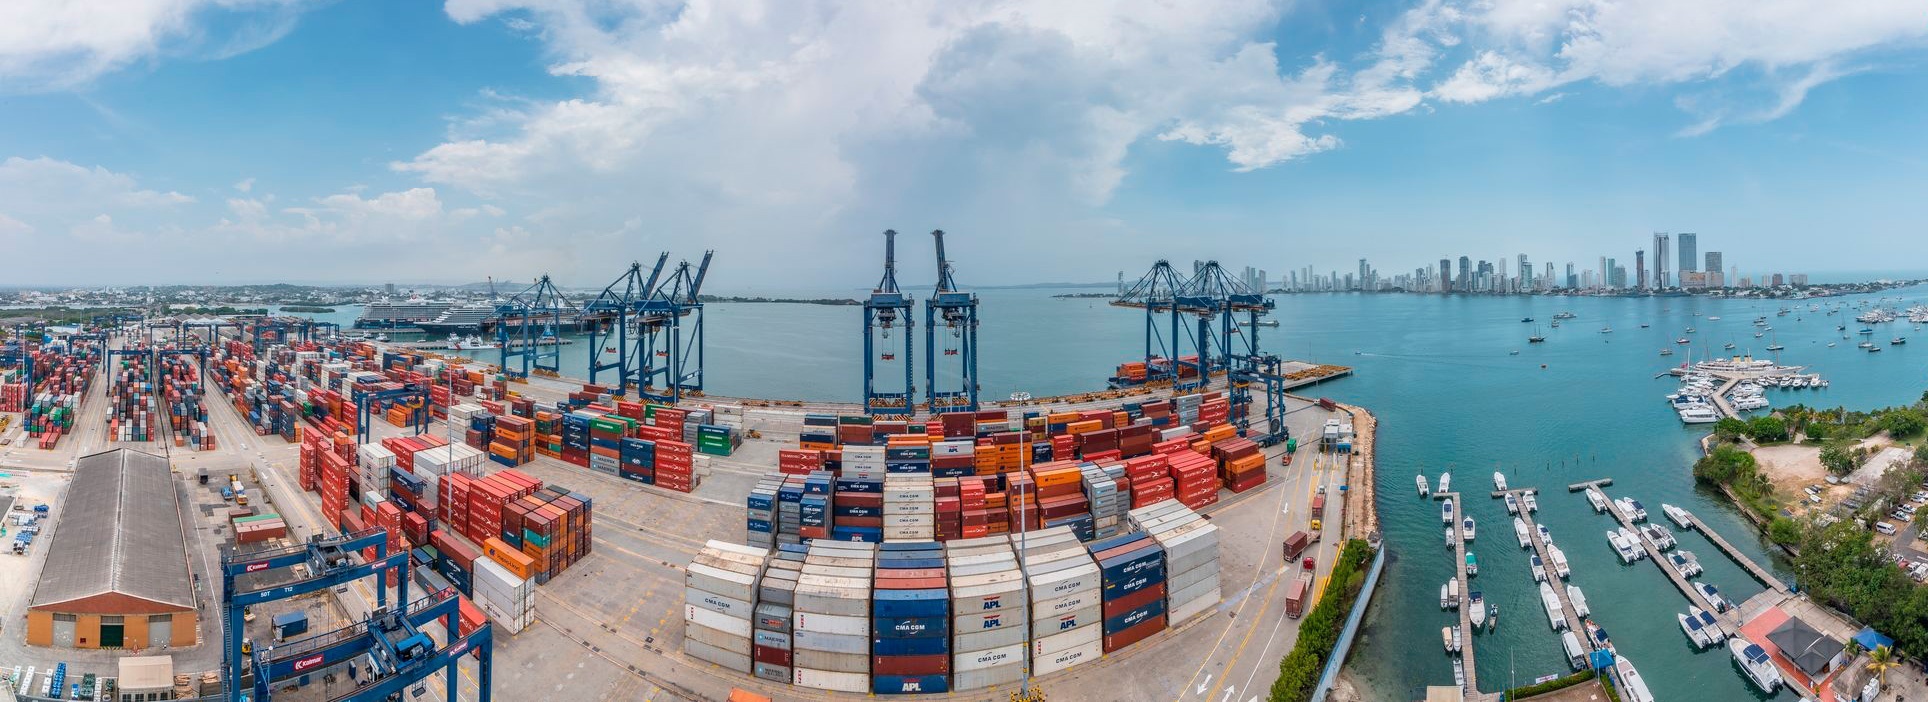 Port of Cartagena - International Moving